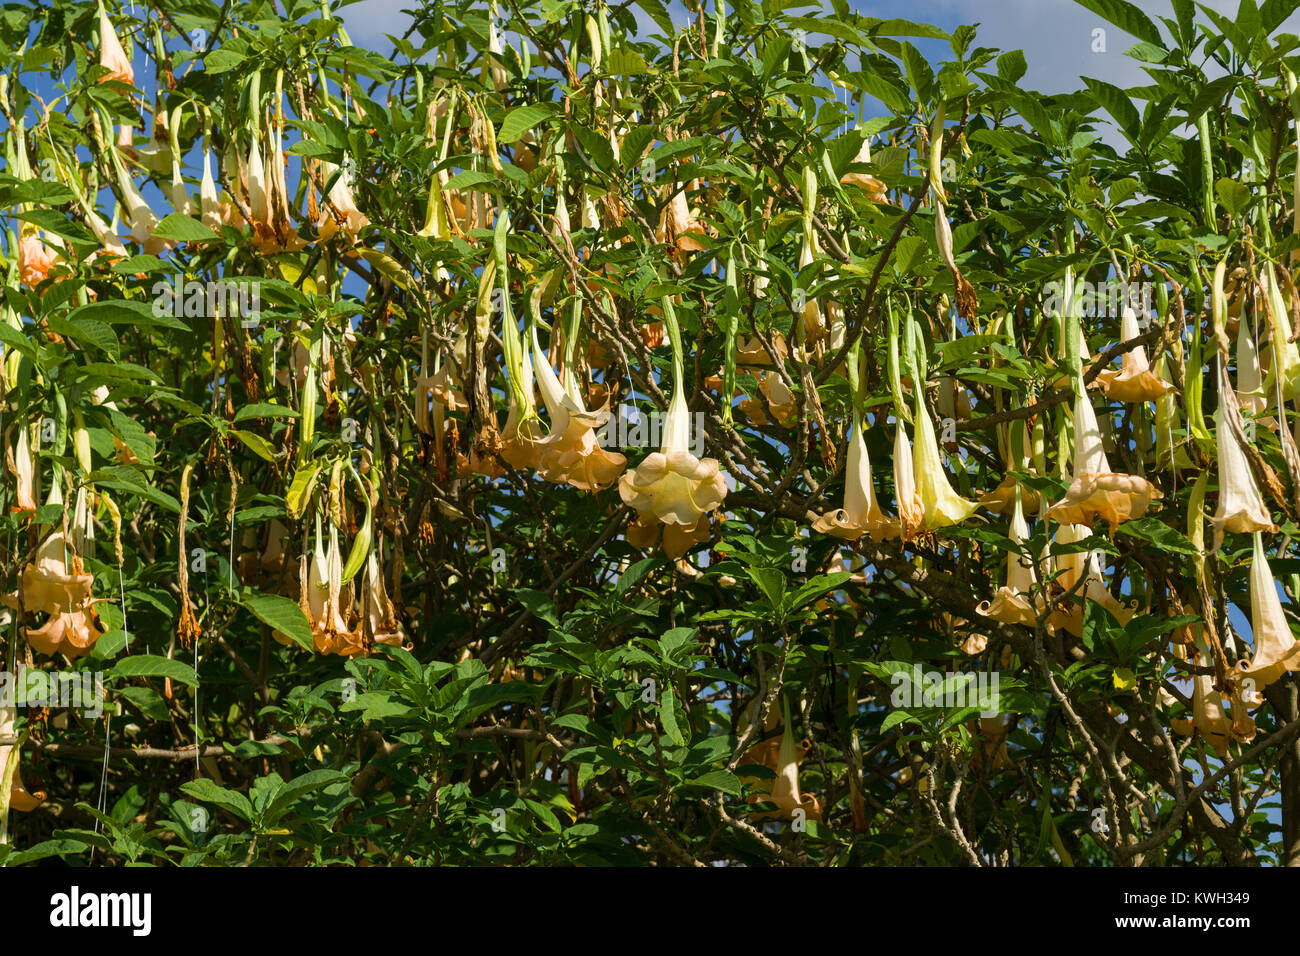 Angels trumpet (Brugmansia suaveolens or Datura suaveolens) flowers hanging down, Kenya, East Africa Stock Photo